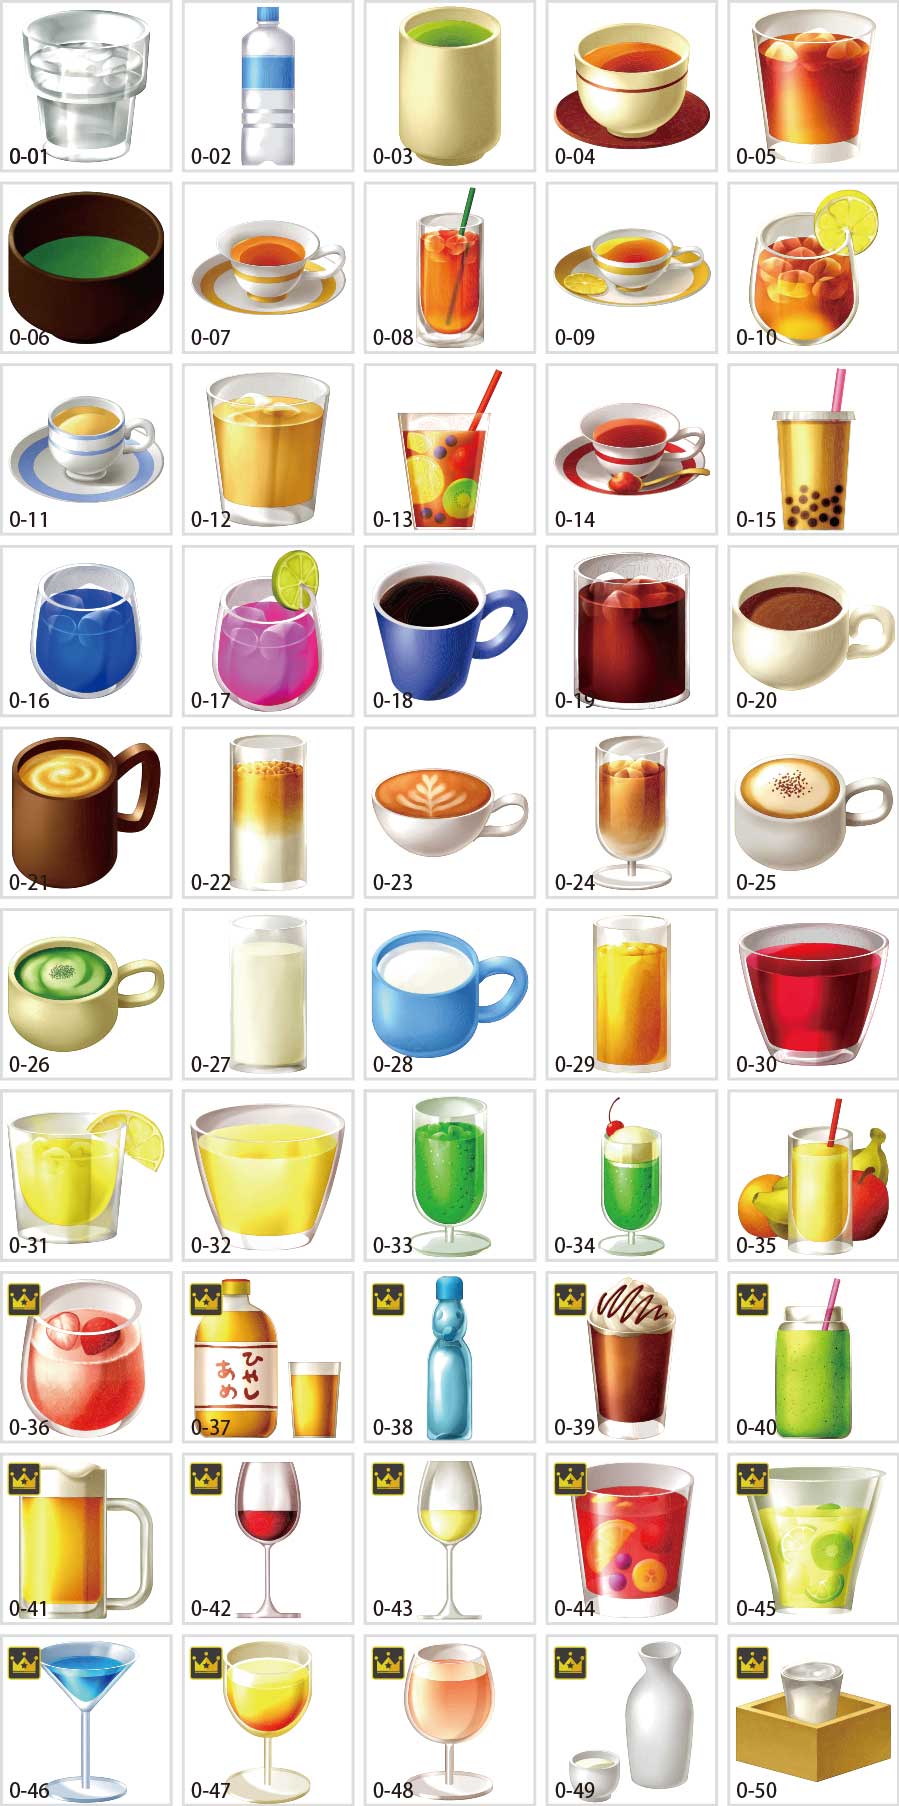 Various drink illustrations